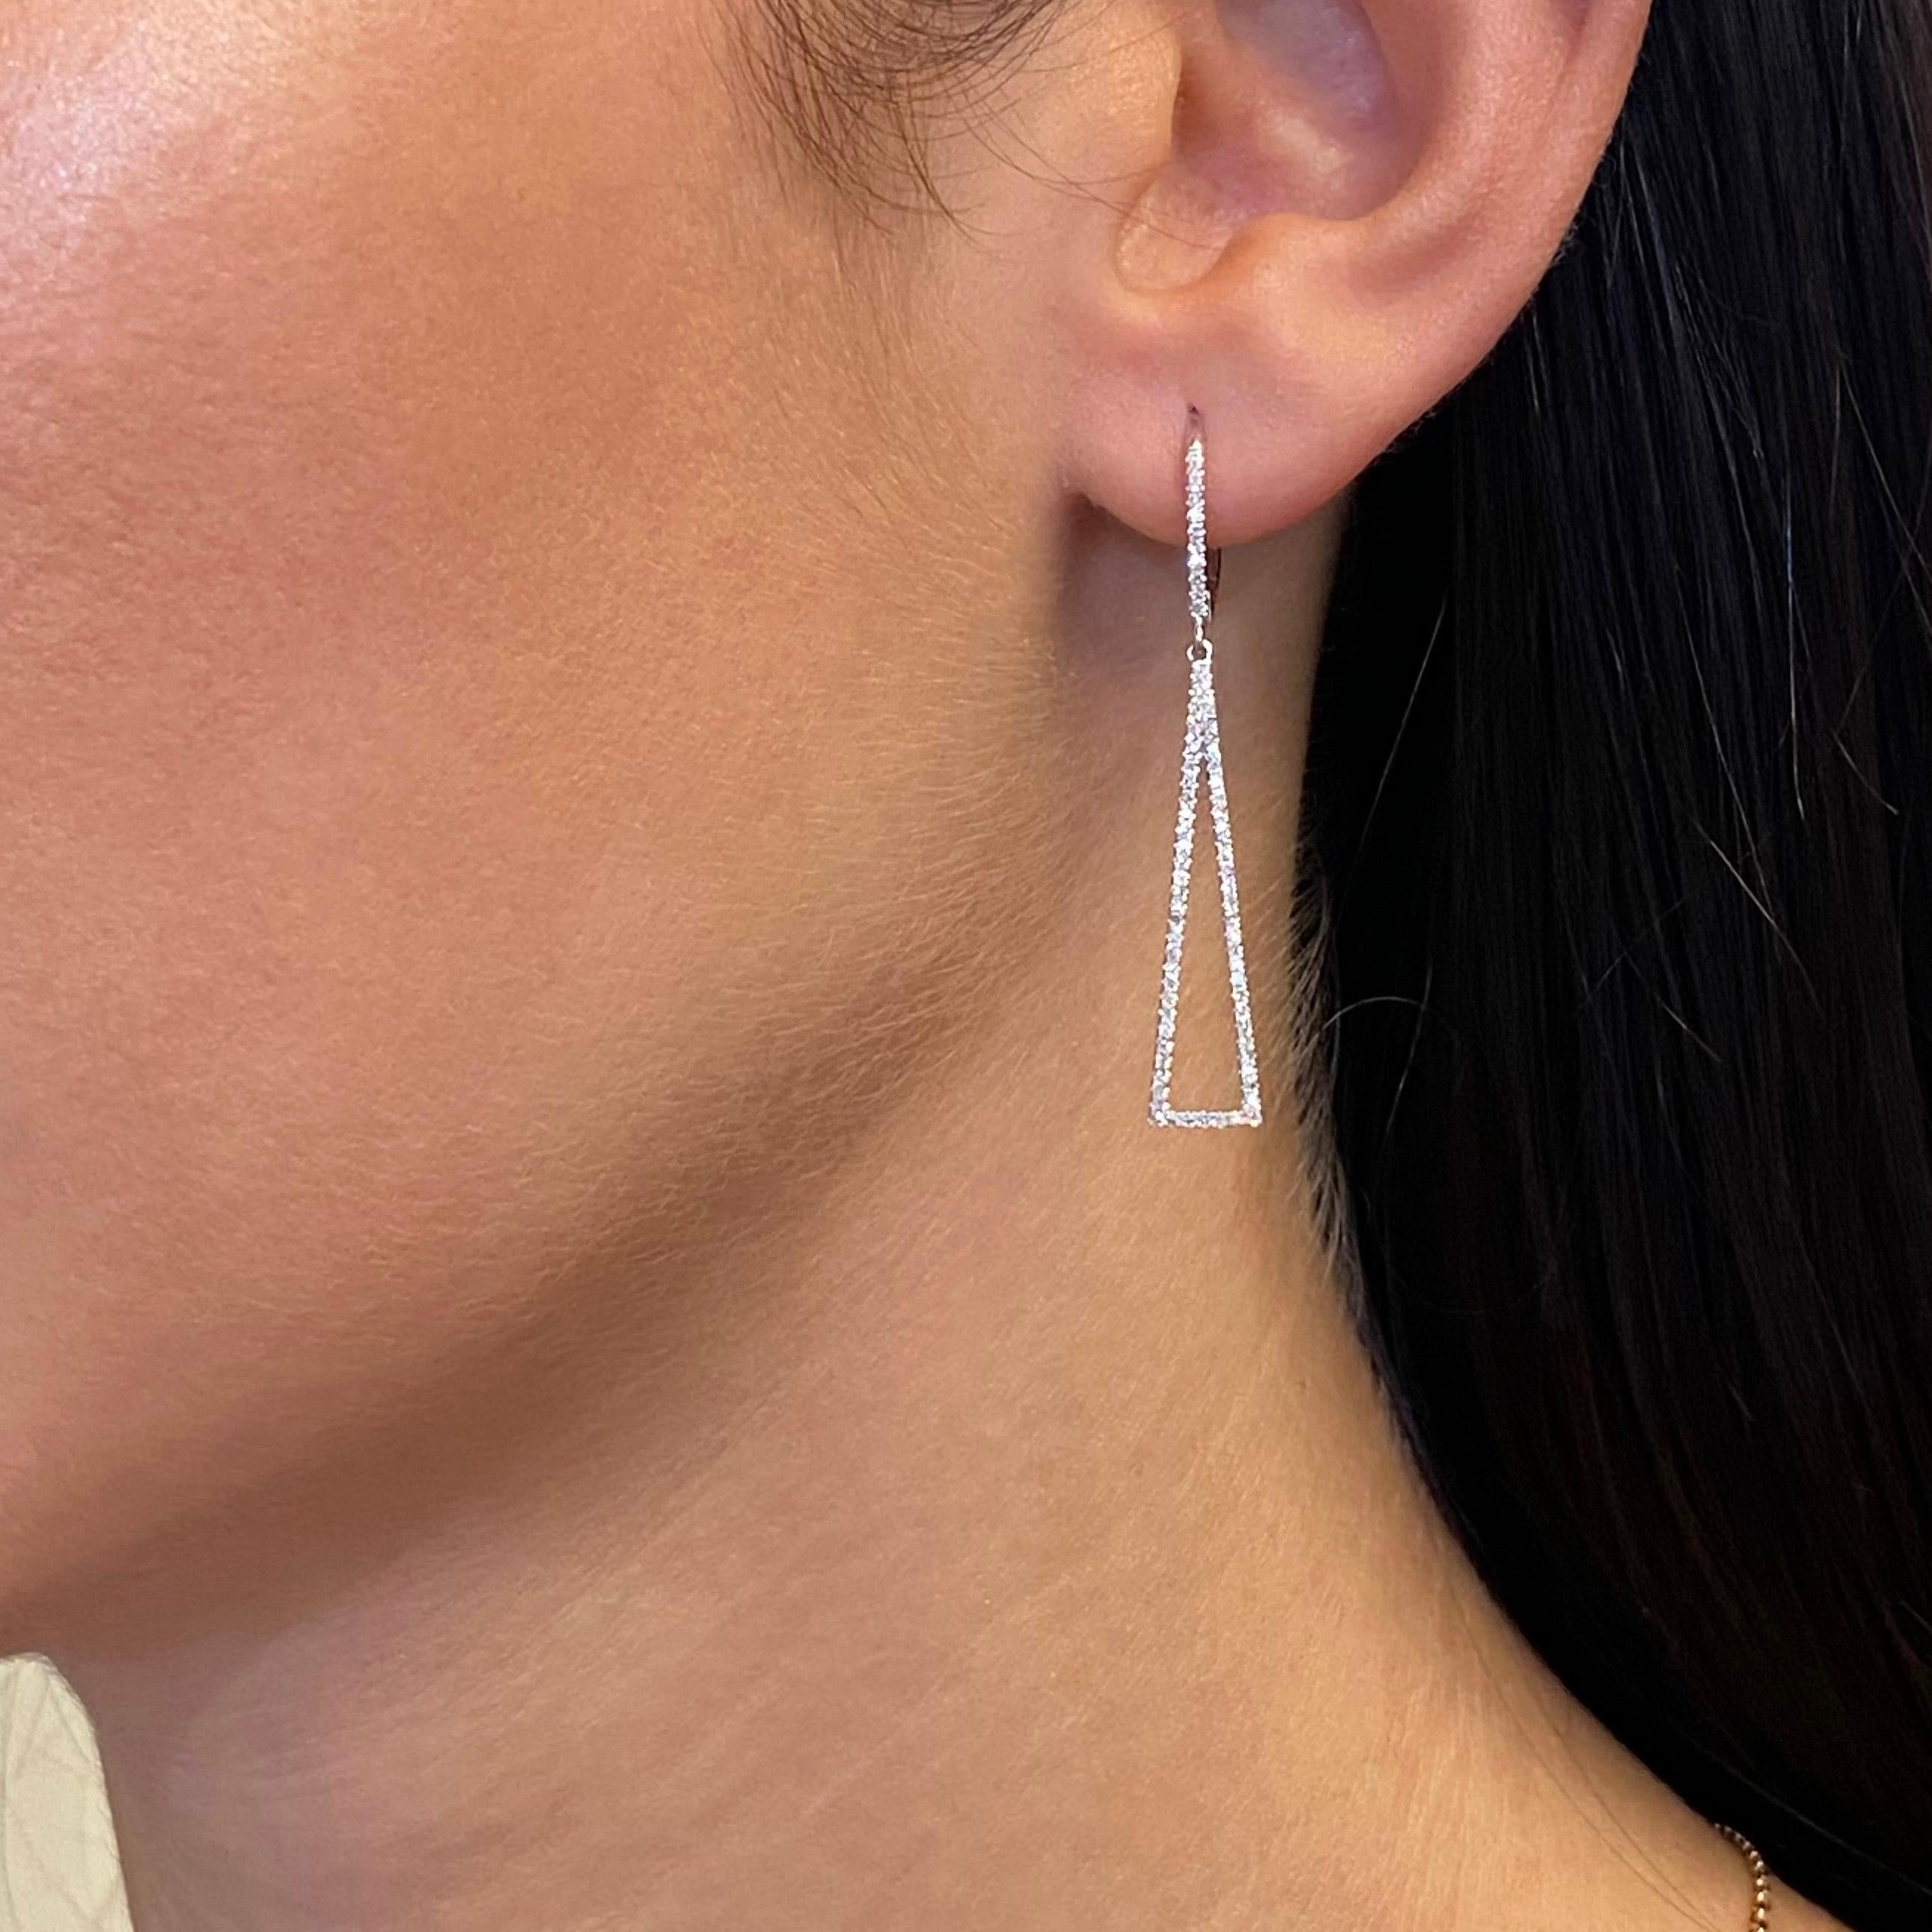 Rachel Koen 14K White Gold Diamond Drop Earrings 0.38Cttw In Excellent Condition For Sale In New York, NY